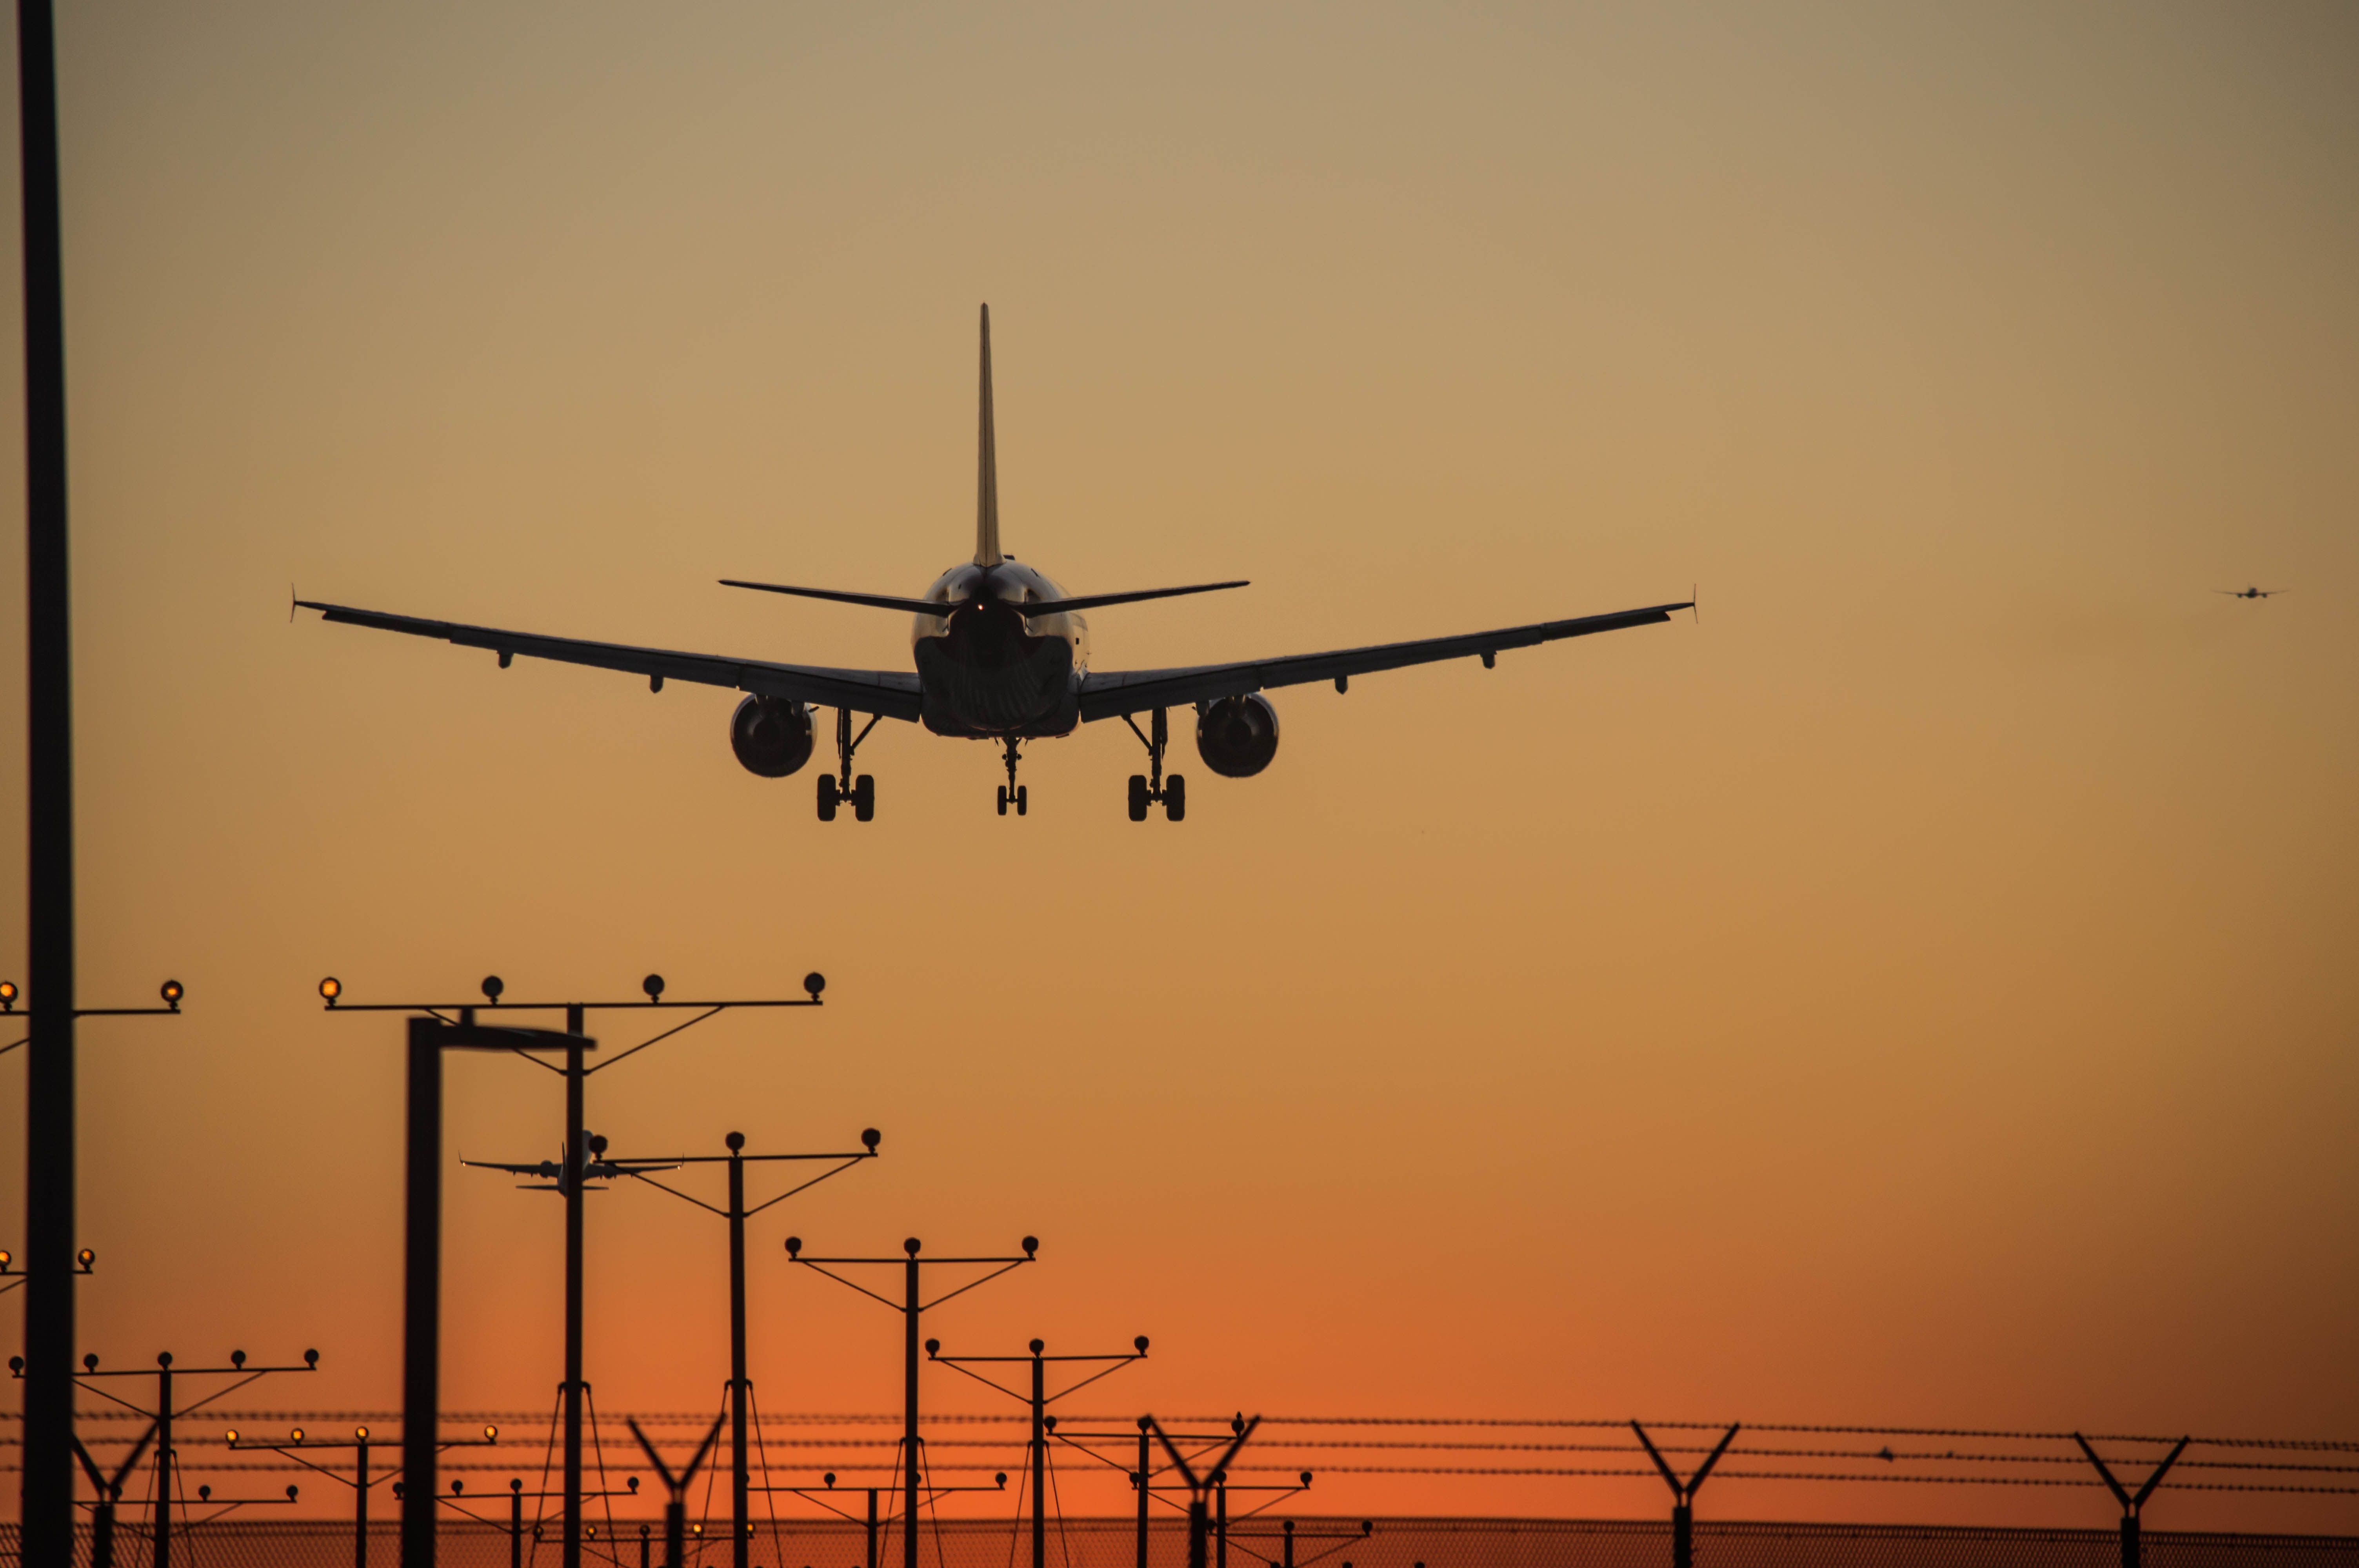 Aircraft landing at Los Angeles International Airport during sunset